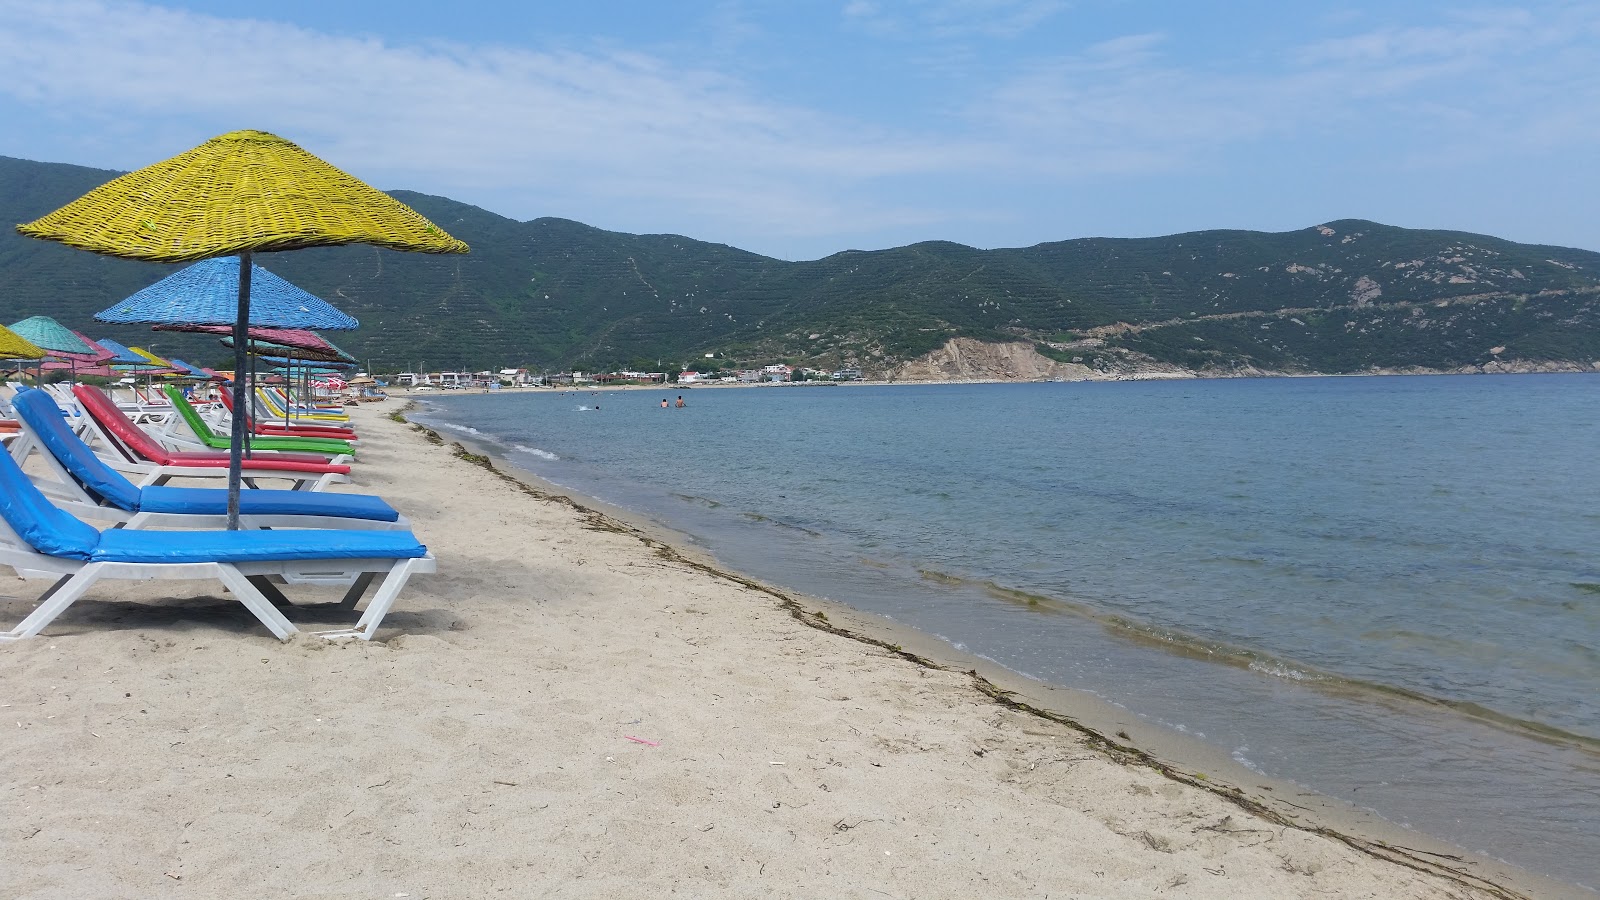 Foto de Turan beach - lugar popular entre os apreciadores de relaxamento